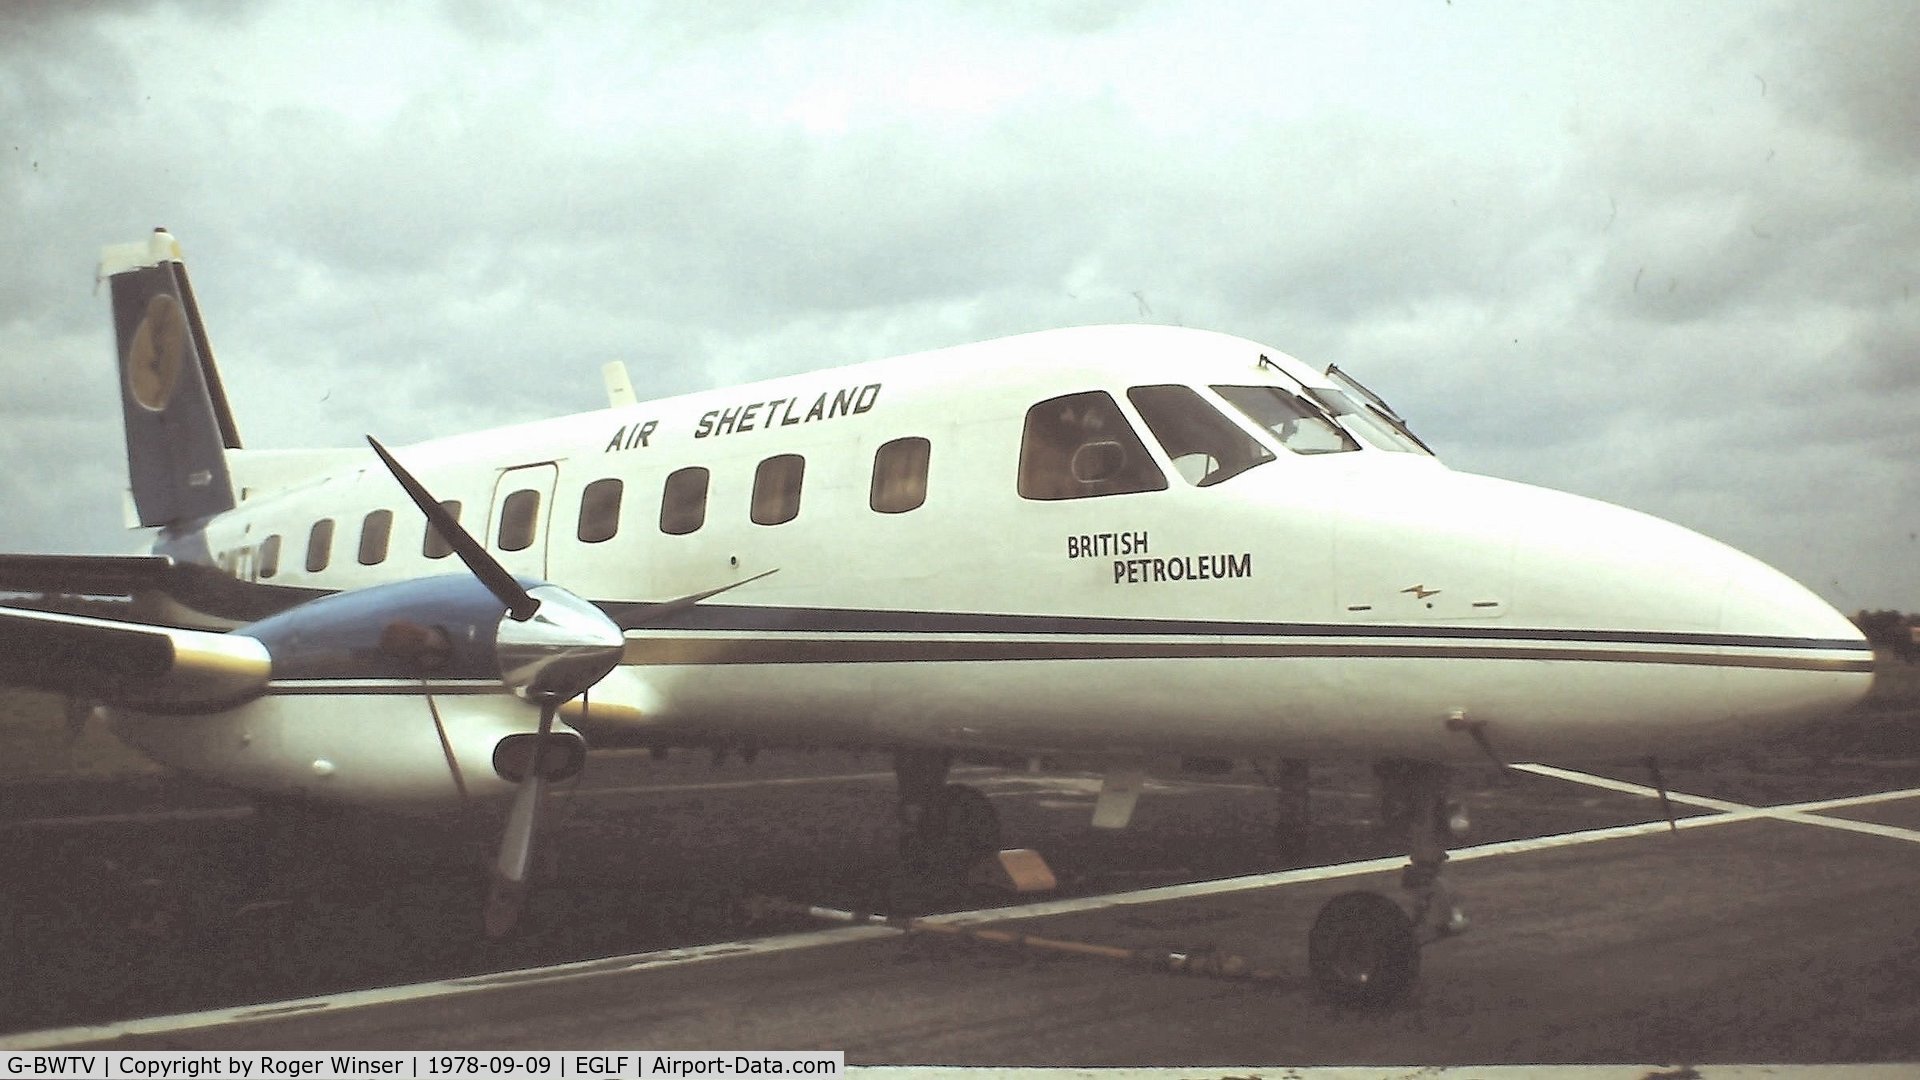 G-BWTV, 1977 Embraer EMB-110P2 Bandeirante C/N 110153, Bandeirante aircraft operated by Air Shetland on display at the 1978 Farnborough Air Show.